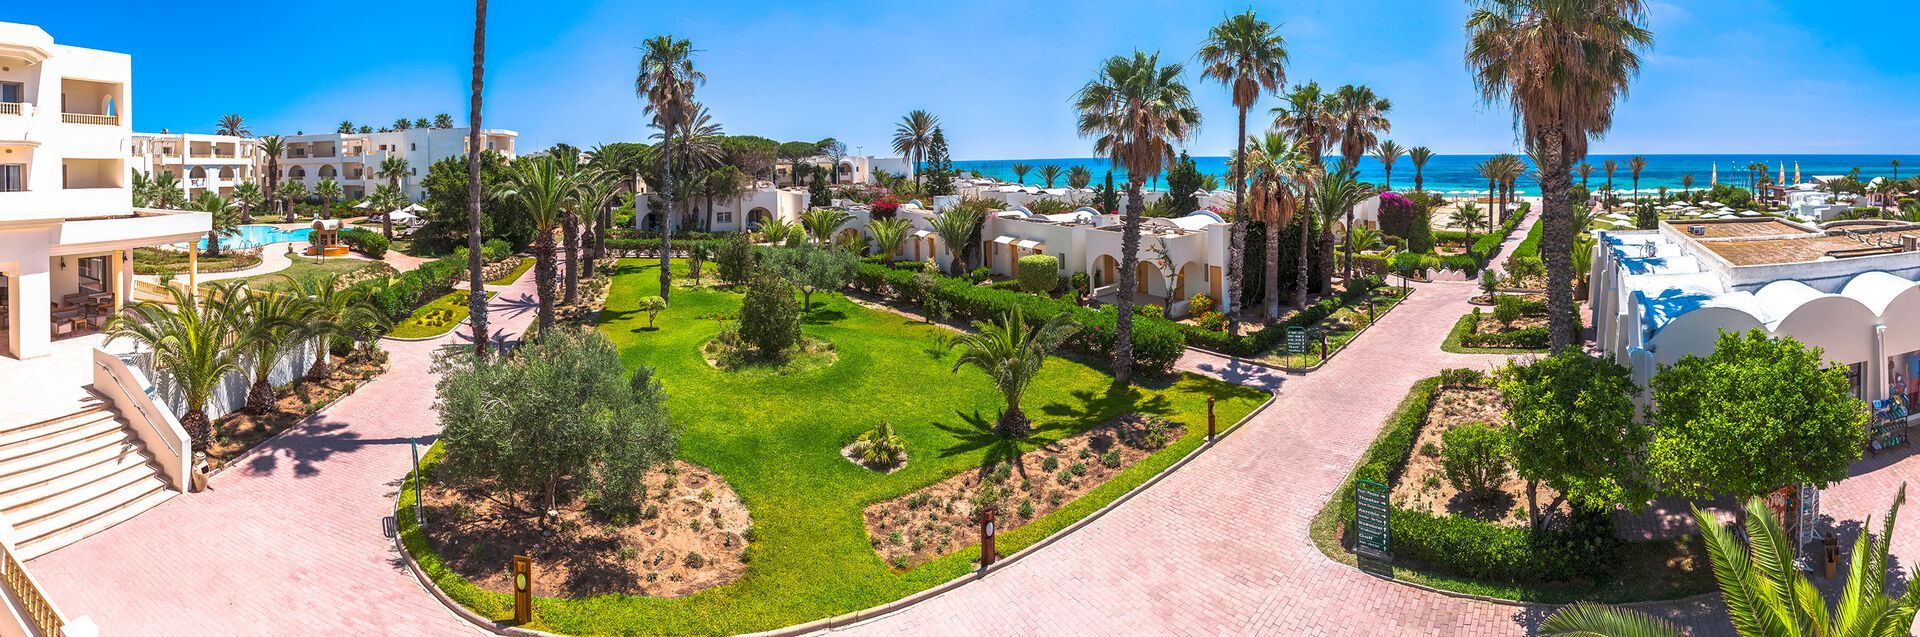 Tunisie - Hammamet - Hotel Calimera Delfino Beach Resort & Spa 4*